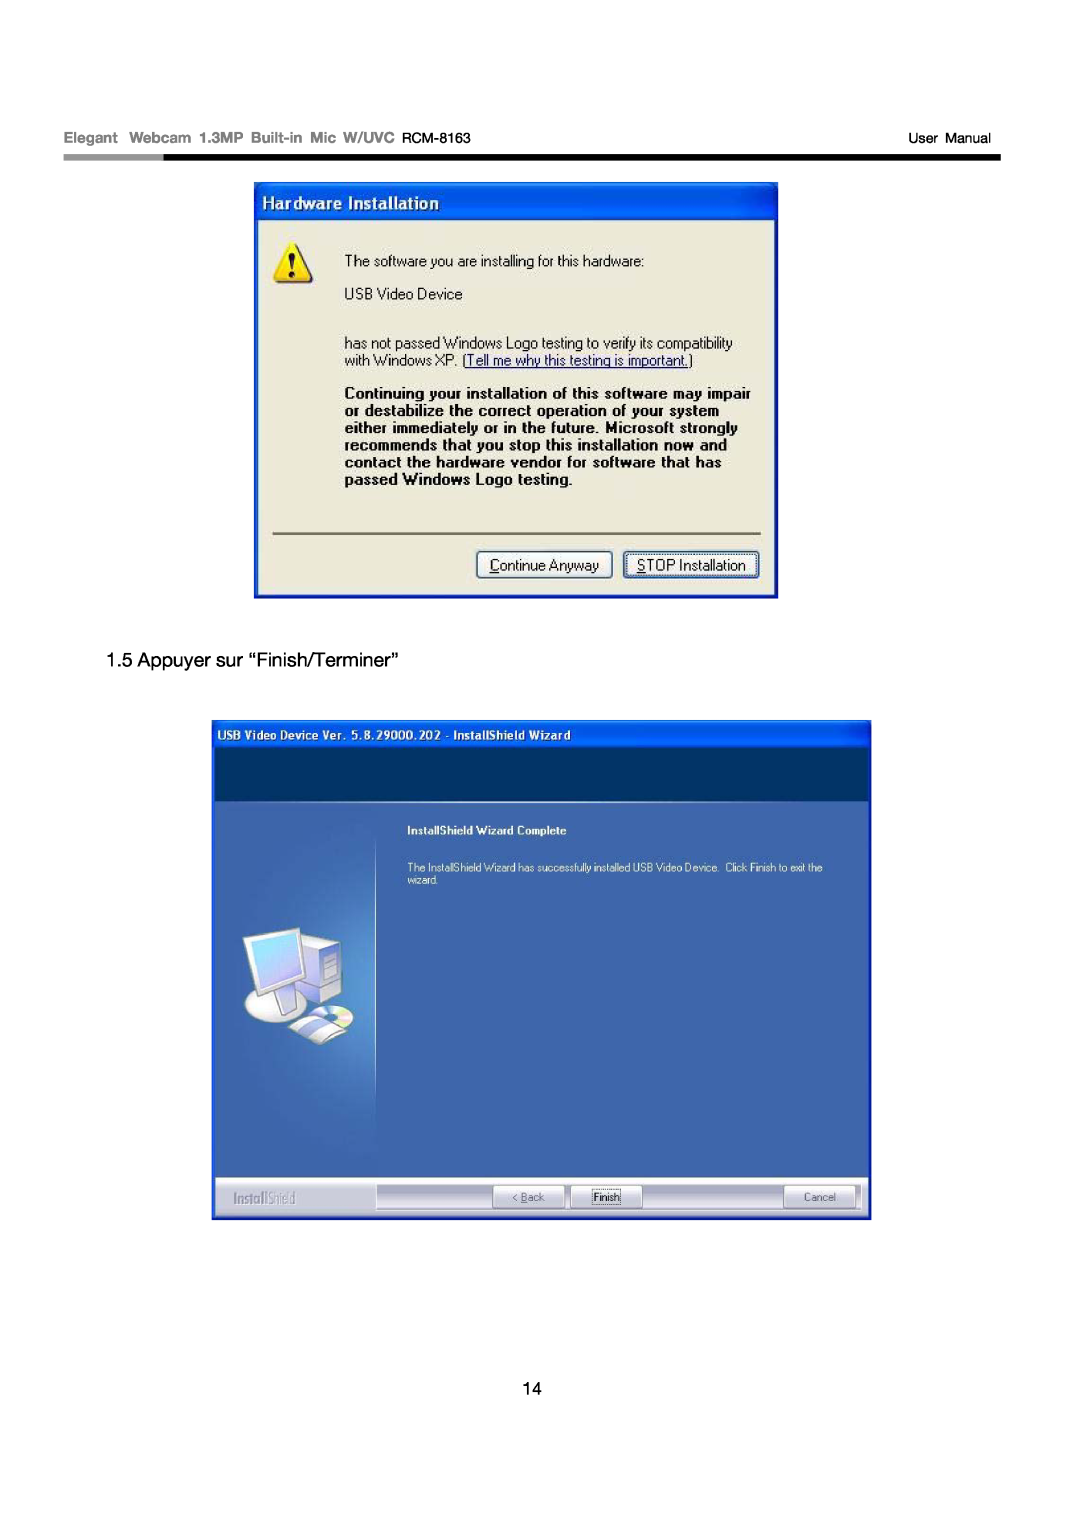 Rosewill user manual Appuyer sur “Finish/Terminer”, Elegant Webcam 1.3MP Built-in Mic W/UVC RCM-8163, User Manual 